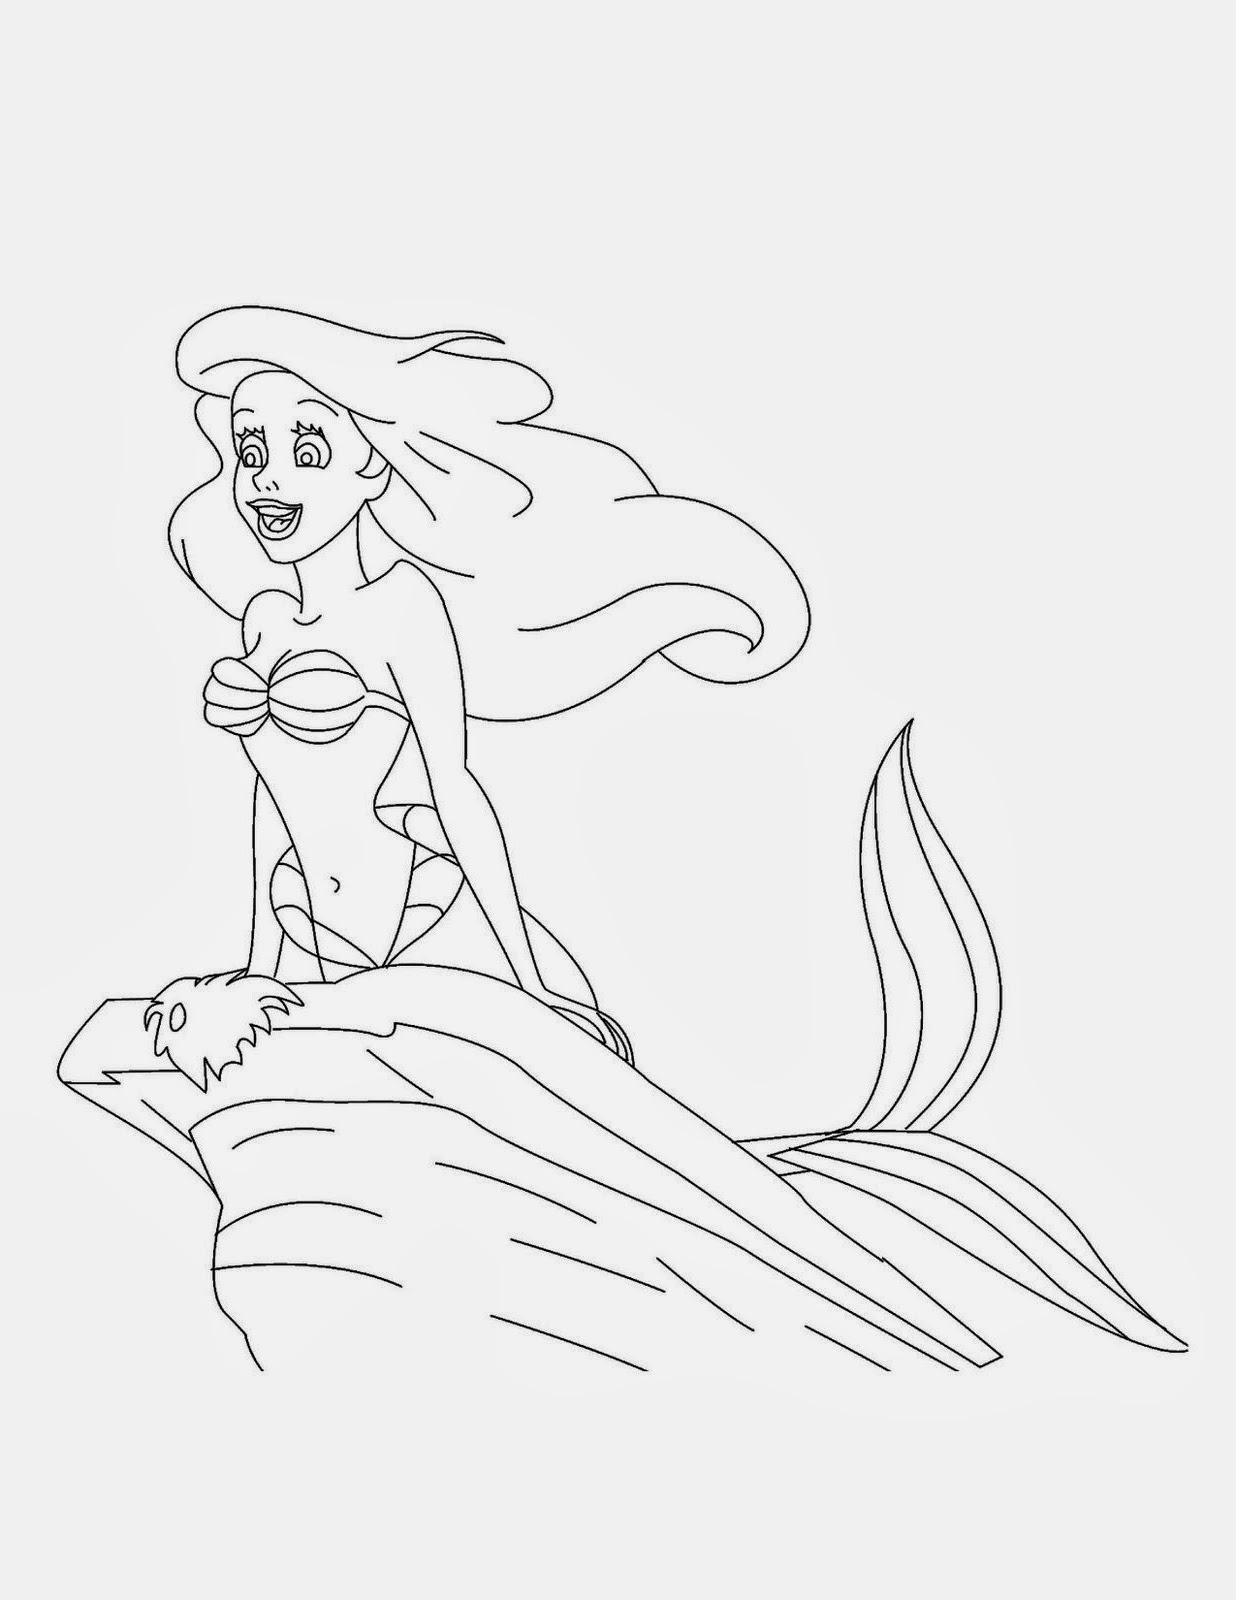 Ariel the little mermaid printable coloring page filmprincesses.filminspector.com